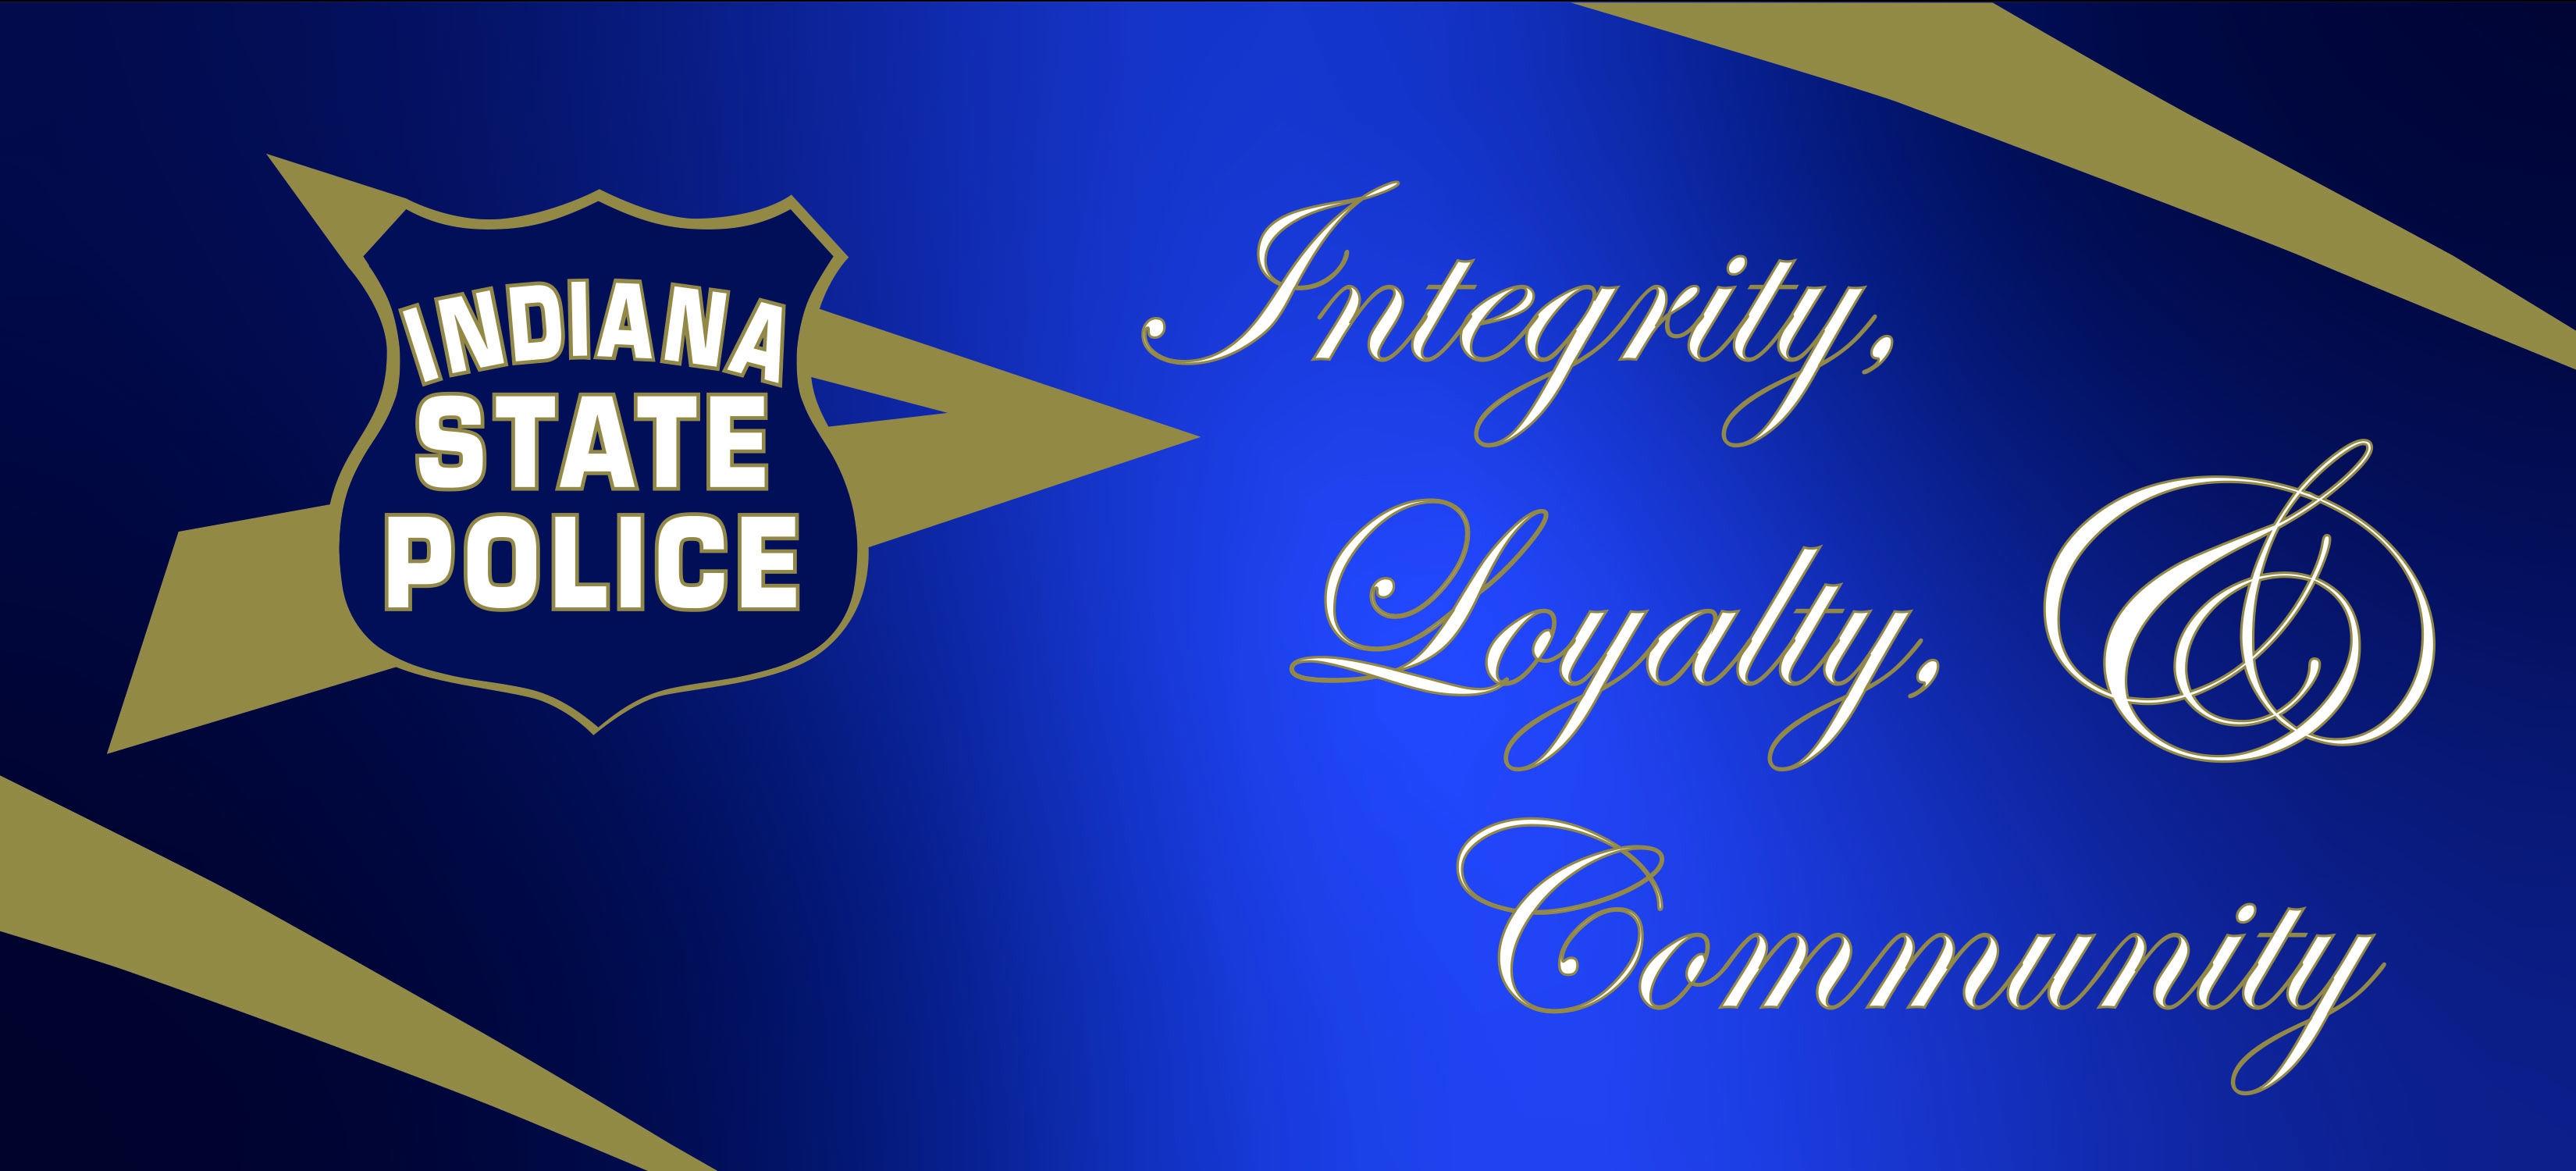 Integrity, Loyalty, & Community